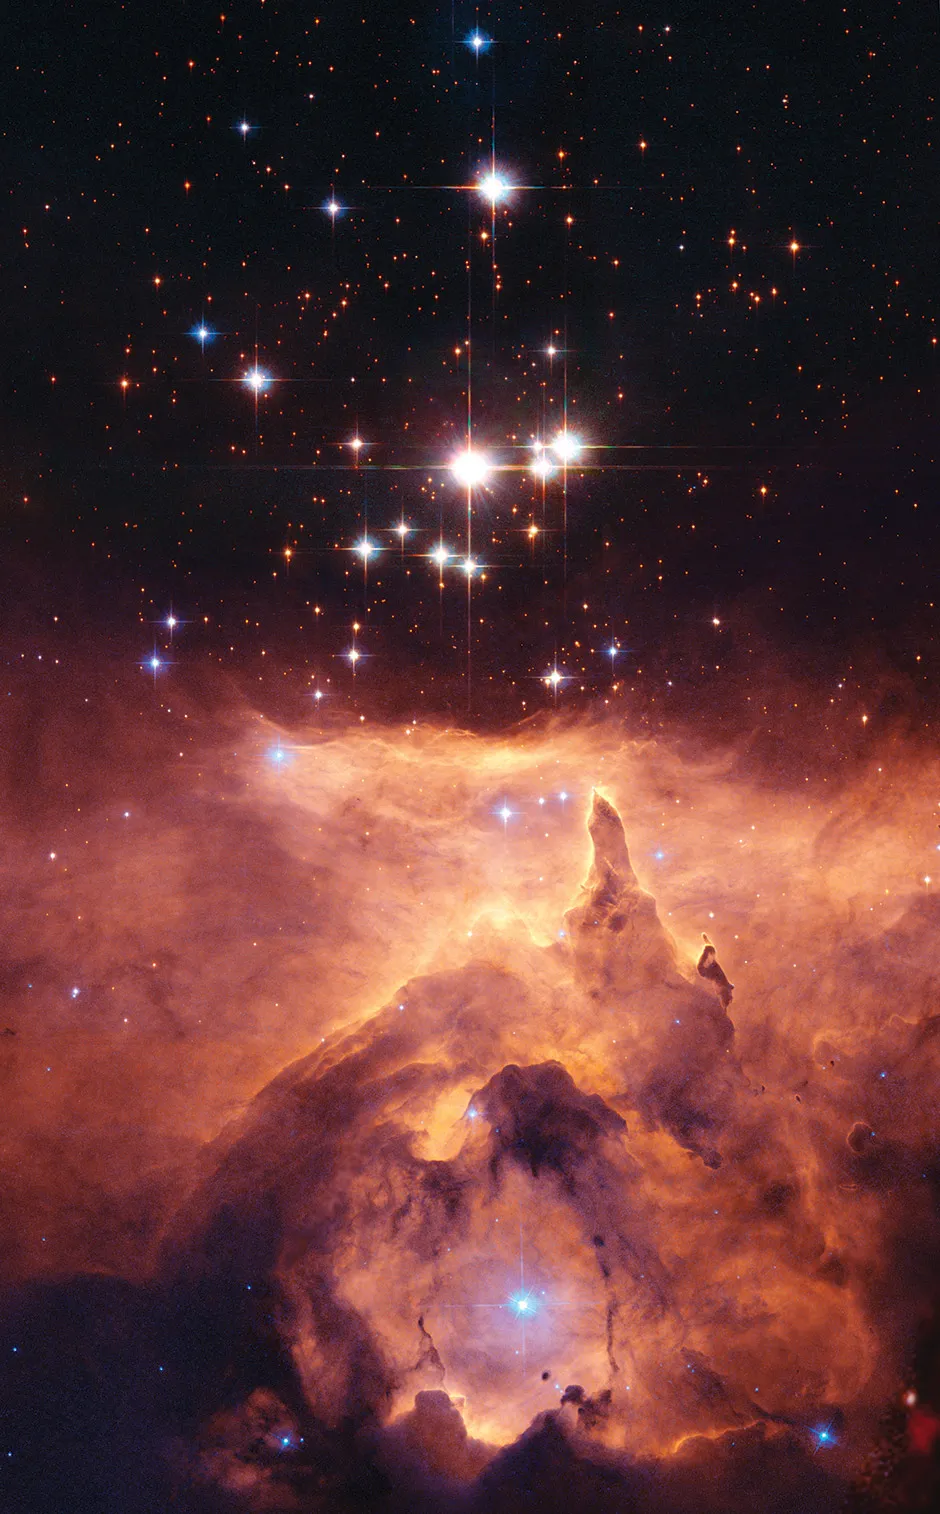 Dust buster © NASA/Hubble Space Telescope Heritage Team